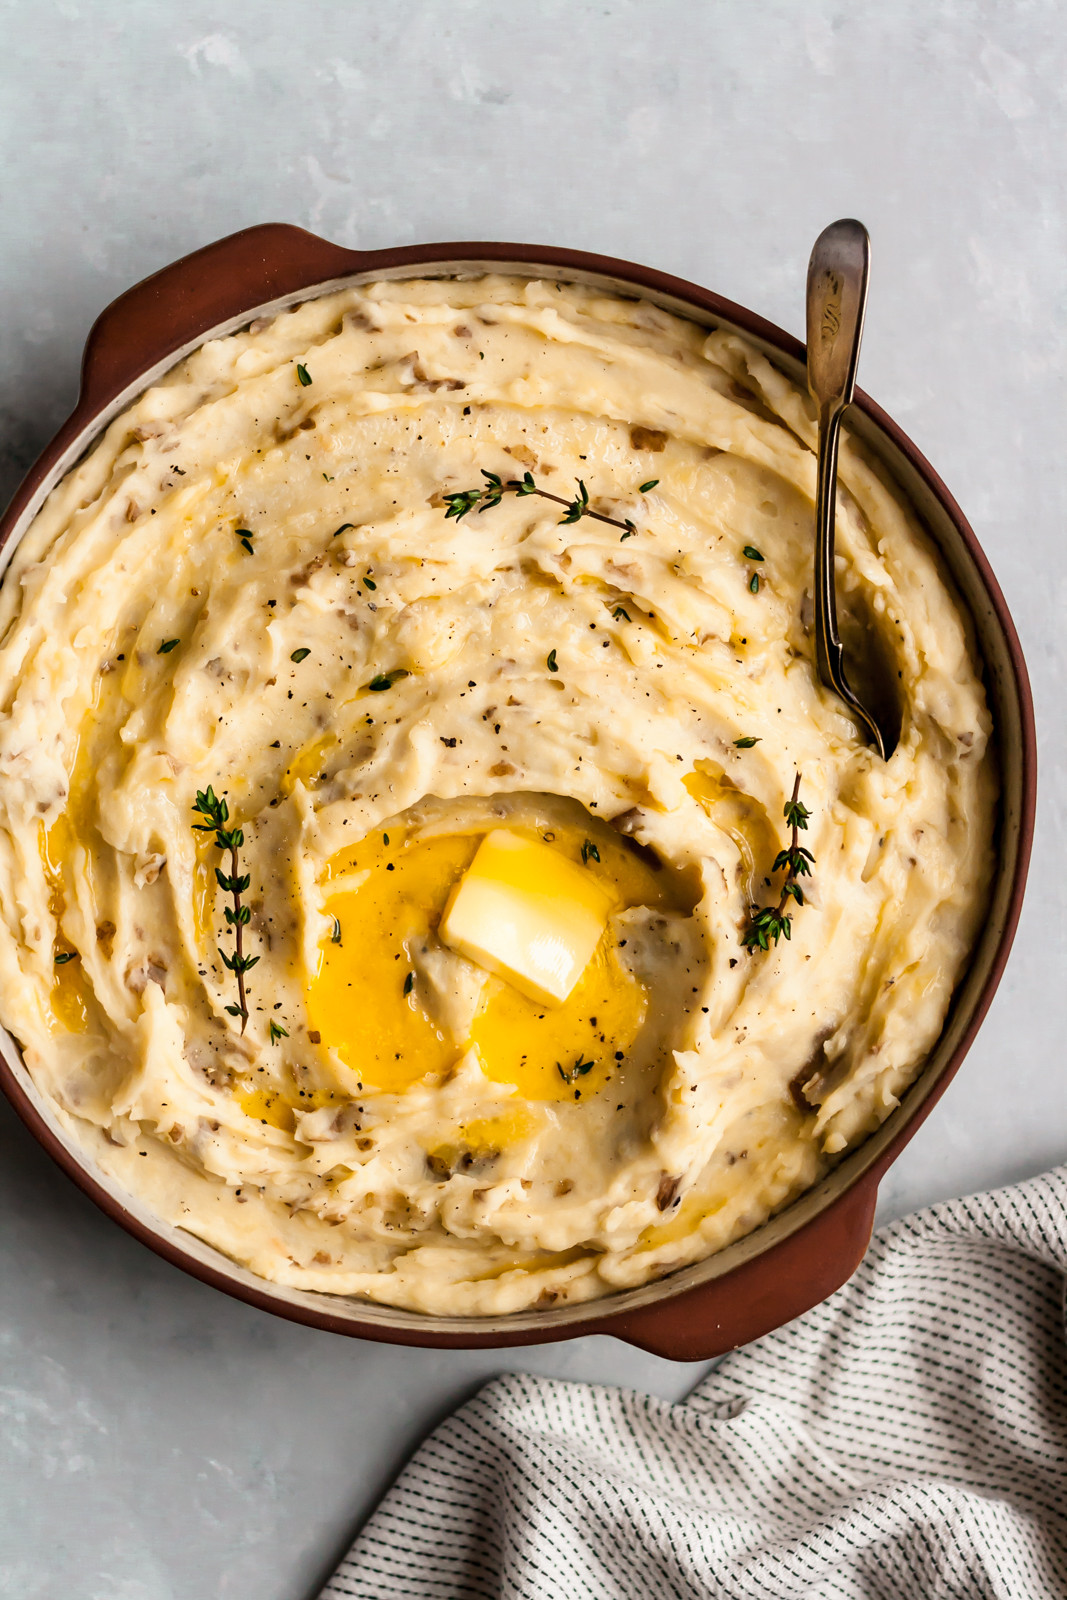 Creamy Garlic Mashed Potatoes Recipe
 The Best Creamy Garlic Slow Cooker Mashed Potatoes